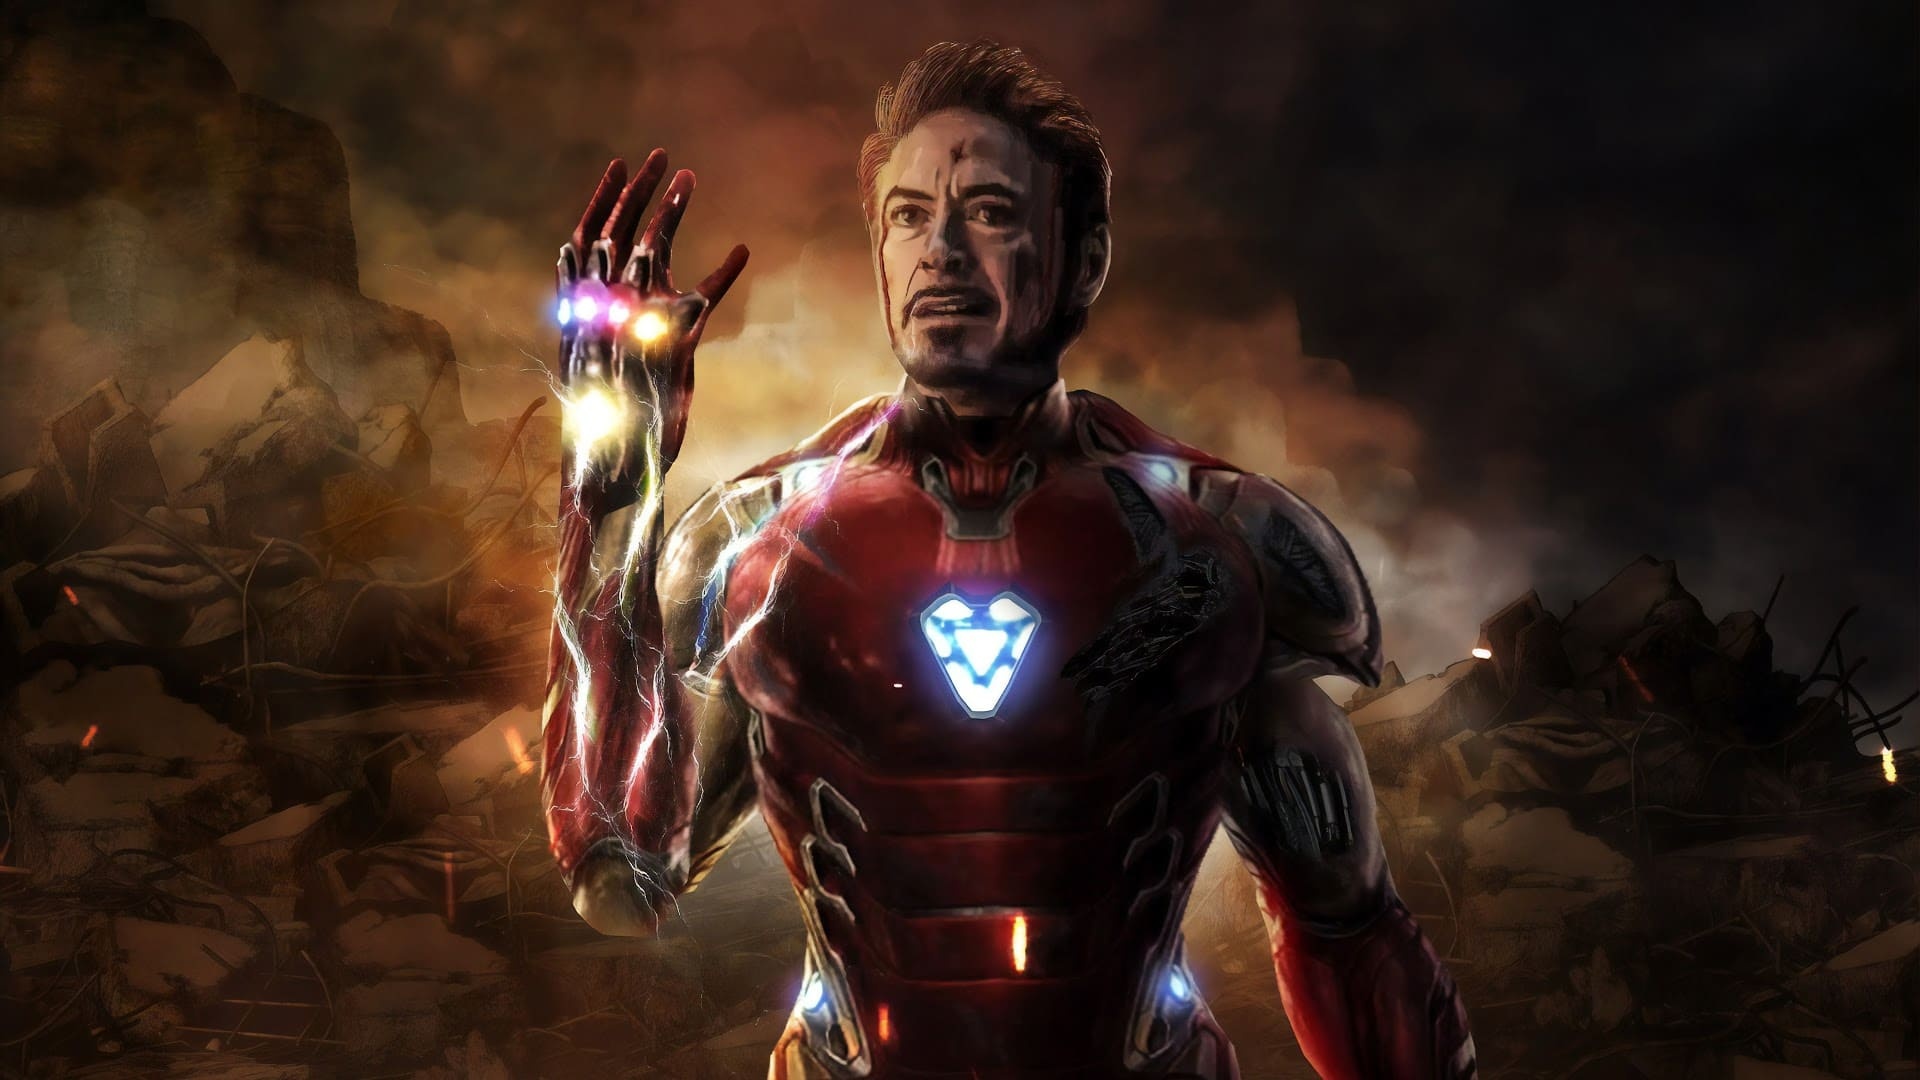 Iron Man: RDJ, A billionaire industrialist and genius inventor. 1920x1080 Full HD Wallpaper.